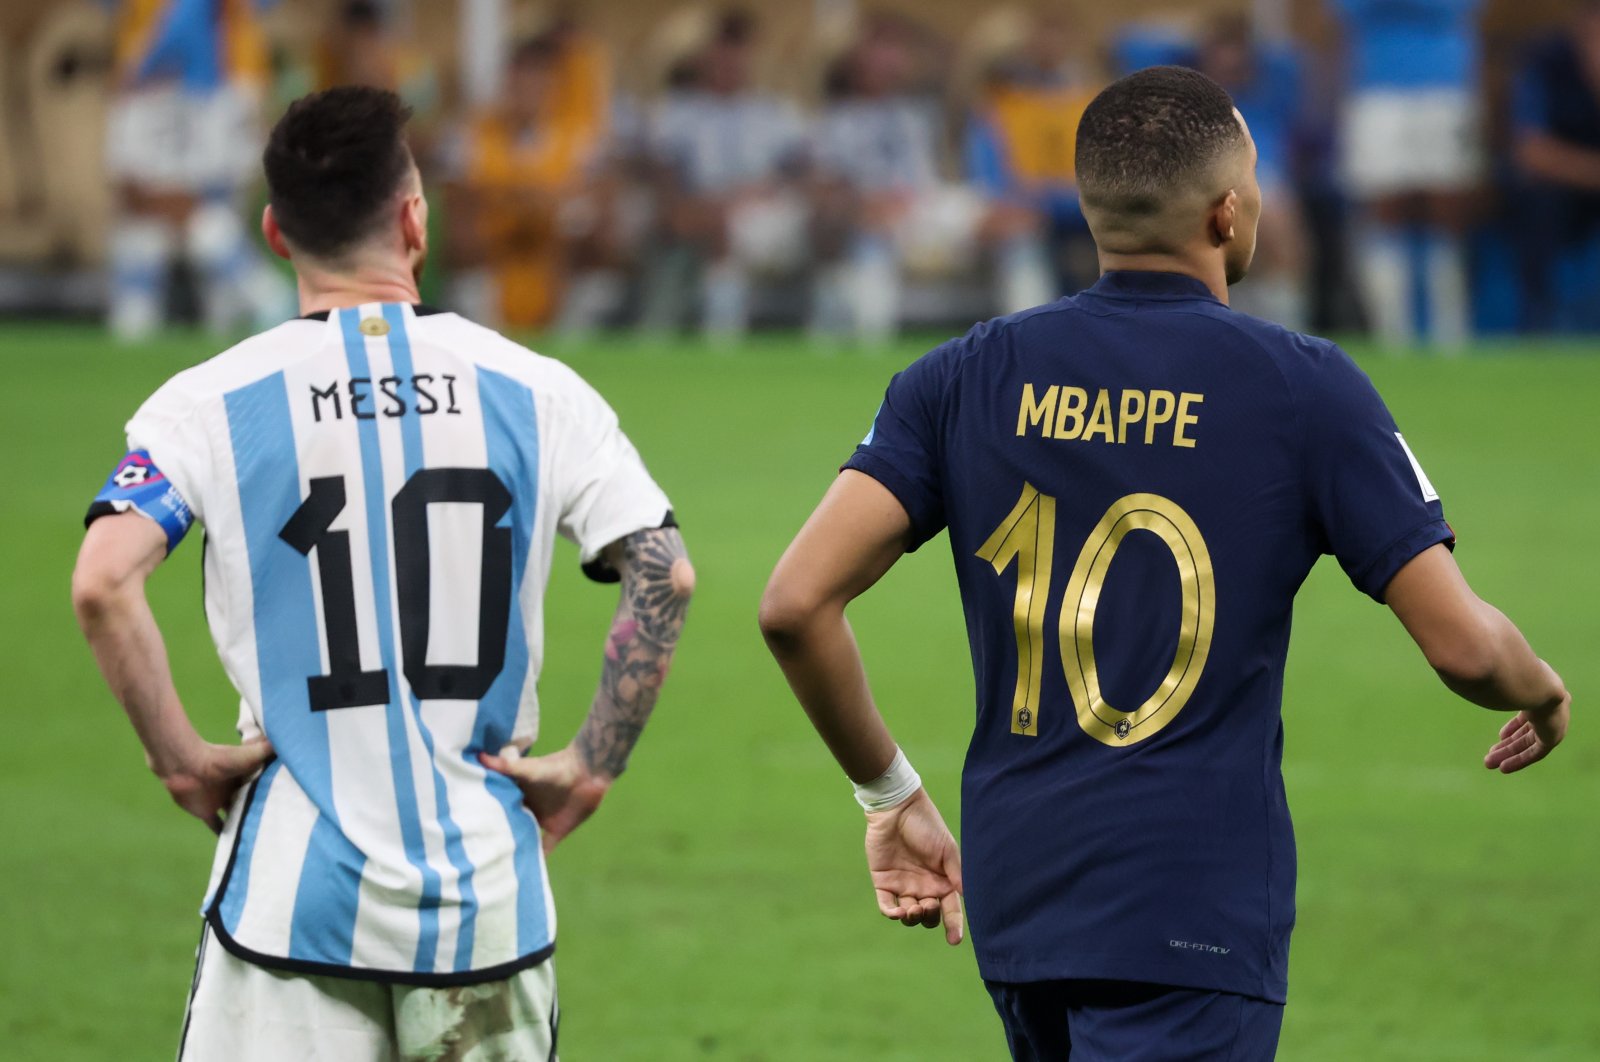 World champion Messi battles Mbappe, Benzema for FIFA Best award